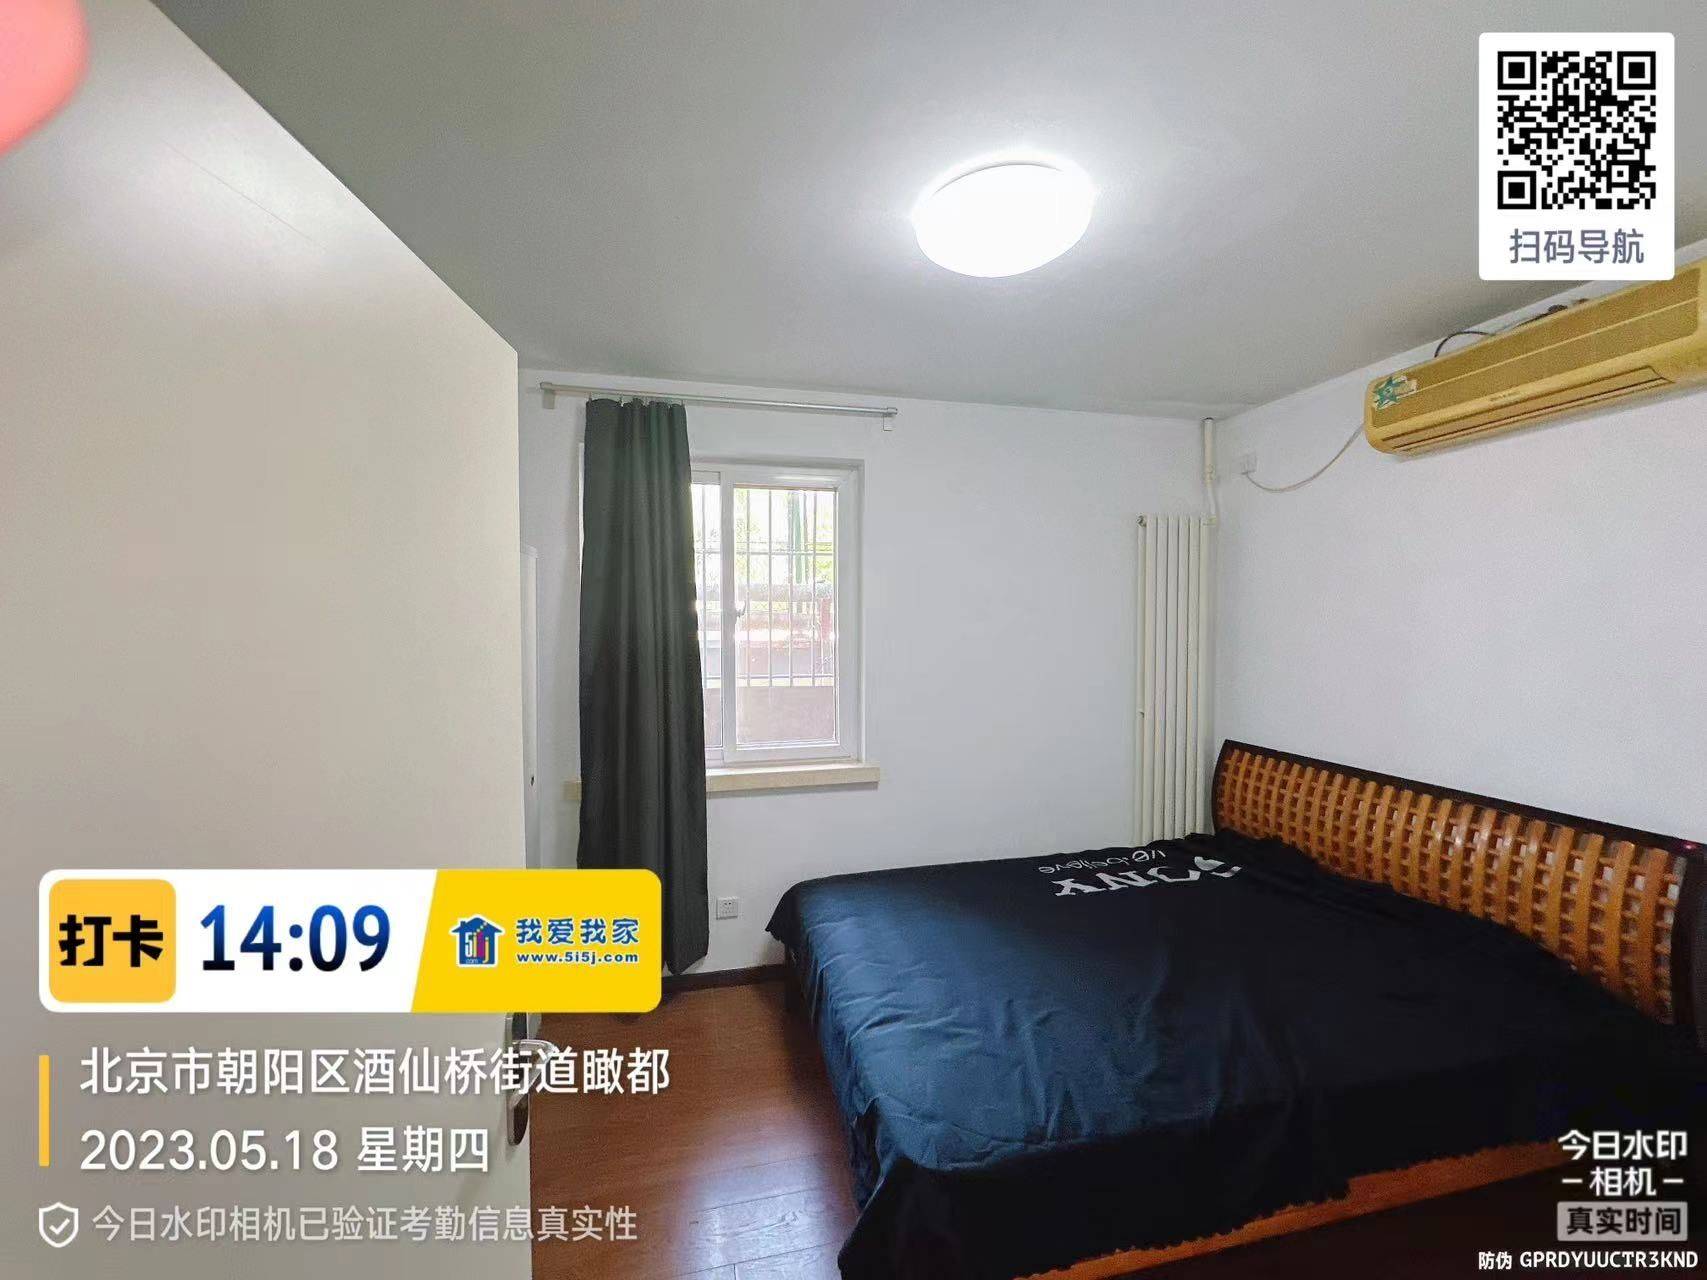 Beijing-Chaoyang-Cozy Home,Clean&Comfy,No Gender Limit,Hustle & Bustle,“Friends”,Chilled,LGBTQ Friendly,Pet Friendly